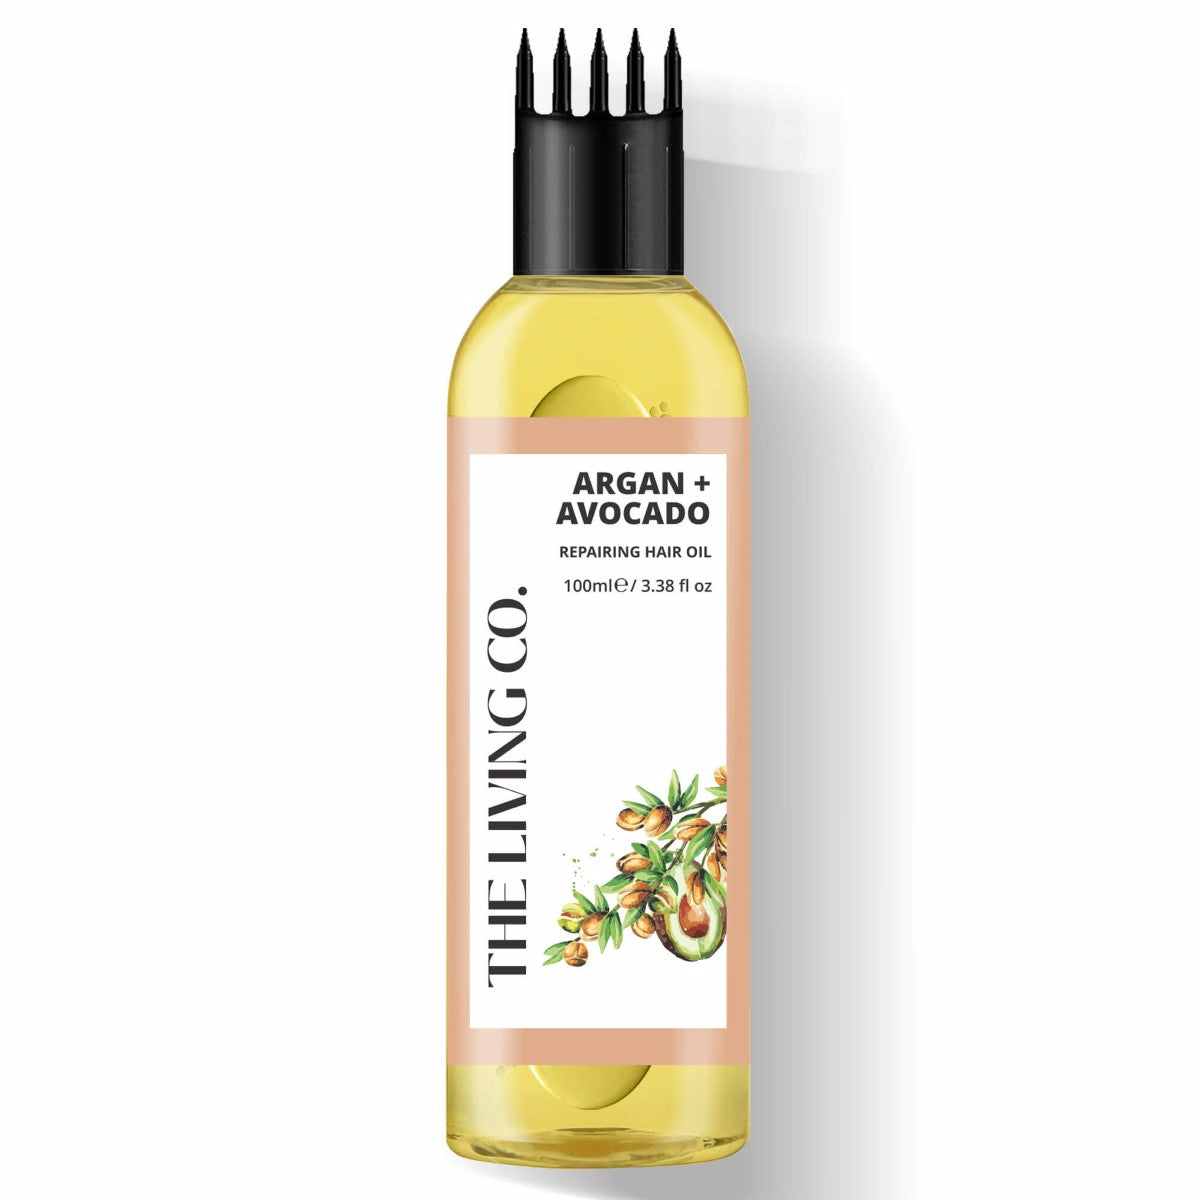 Argan + Avocado Hair Oil